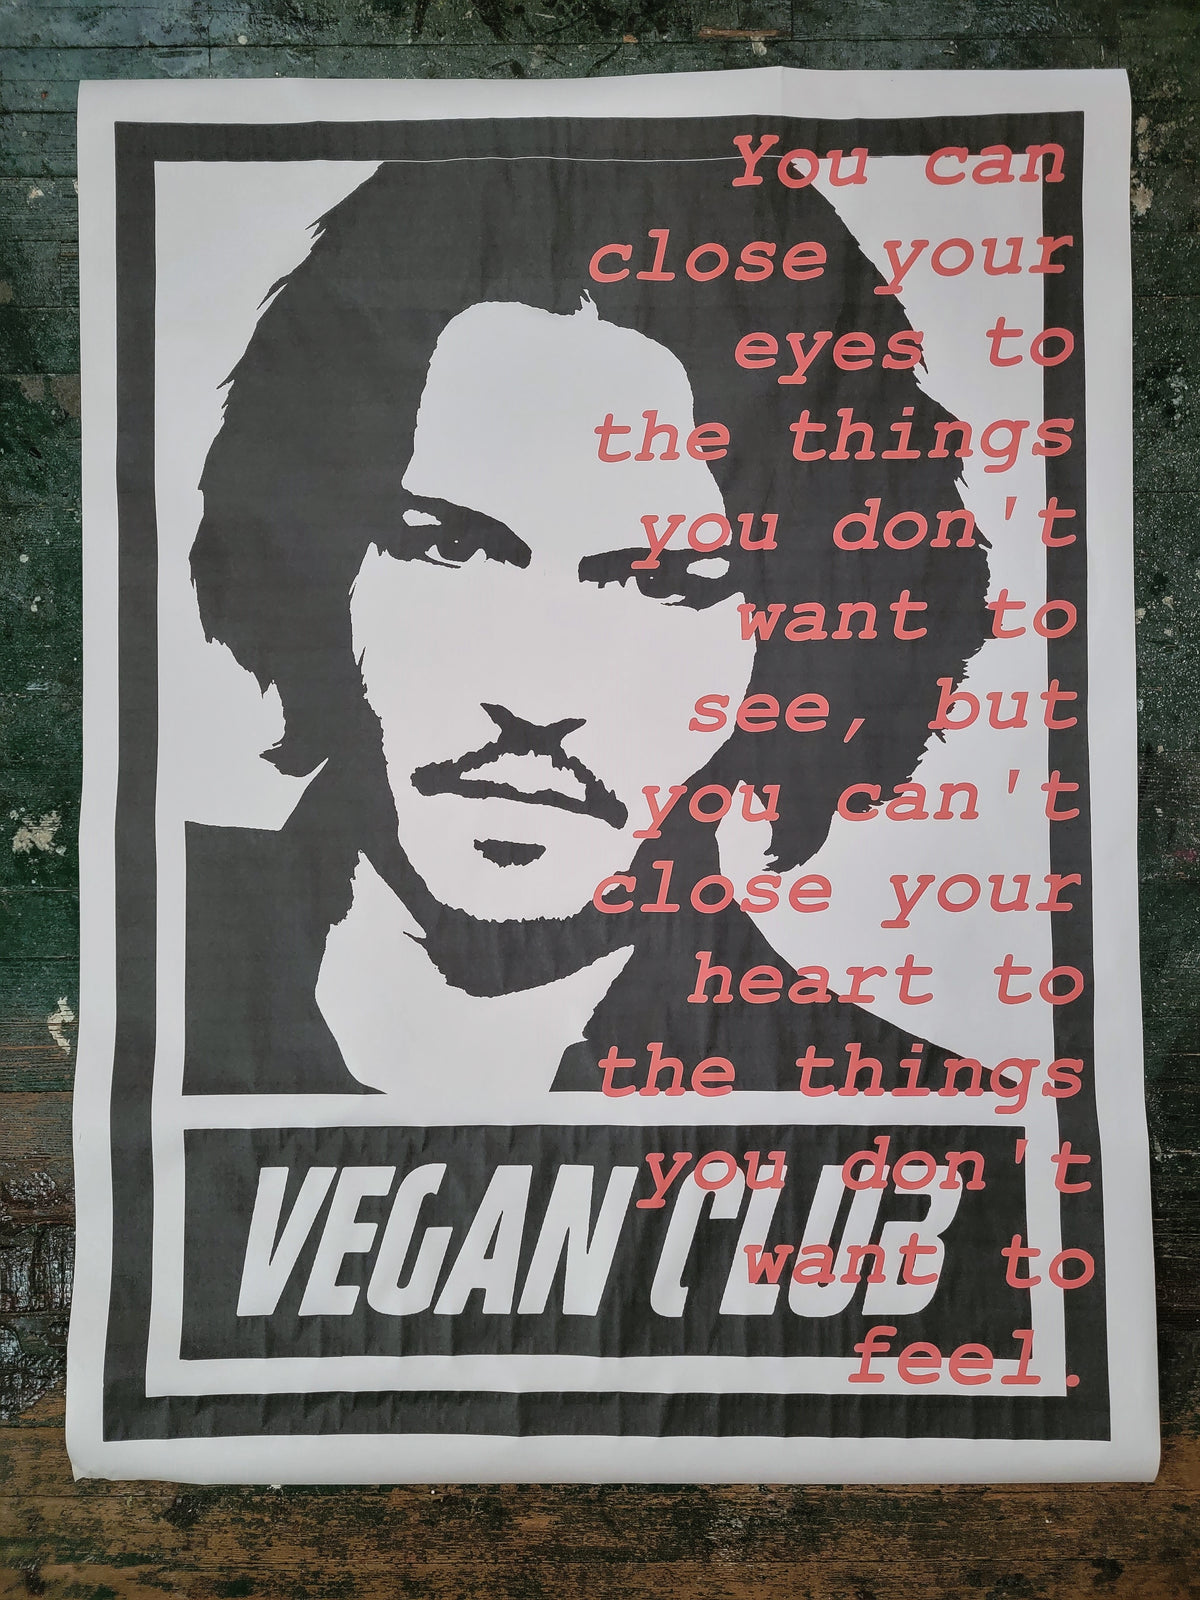 NewsPrint Poster Vegan Club featuring Johnny Depp